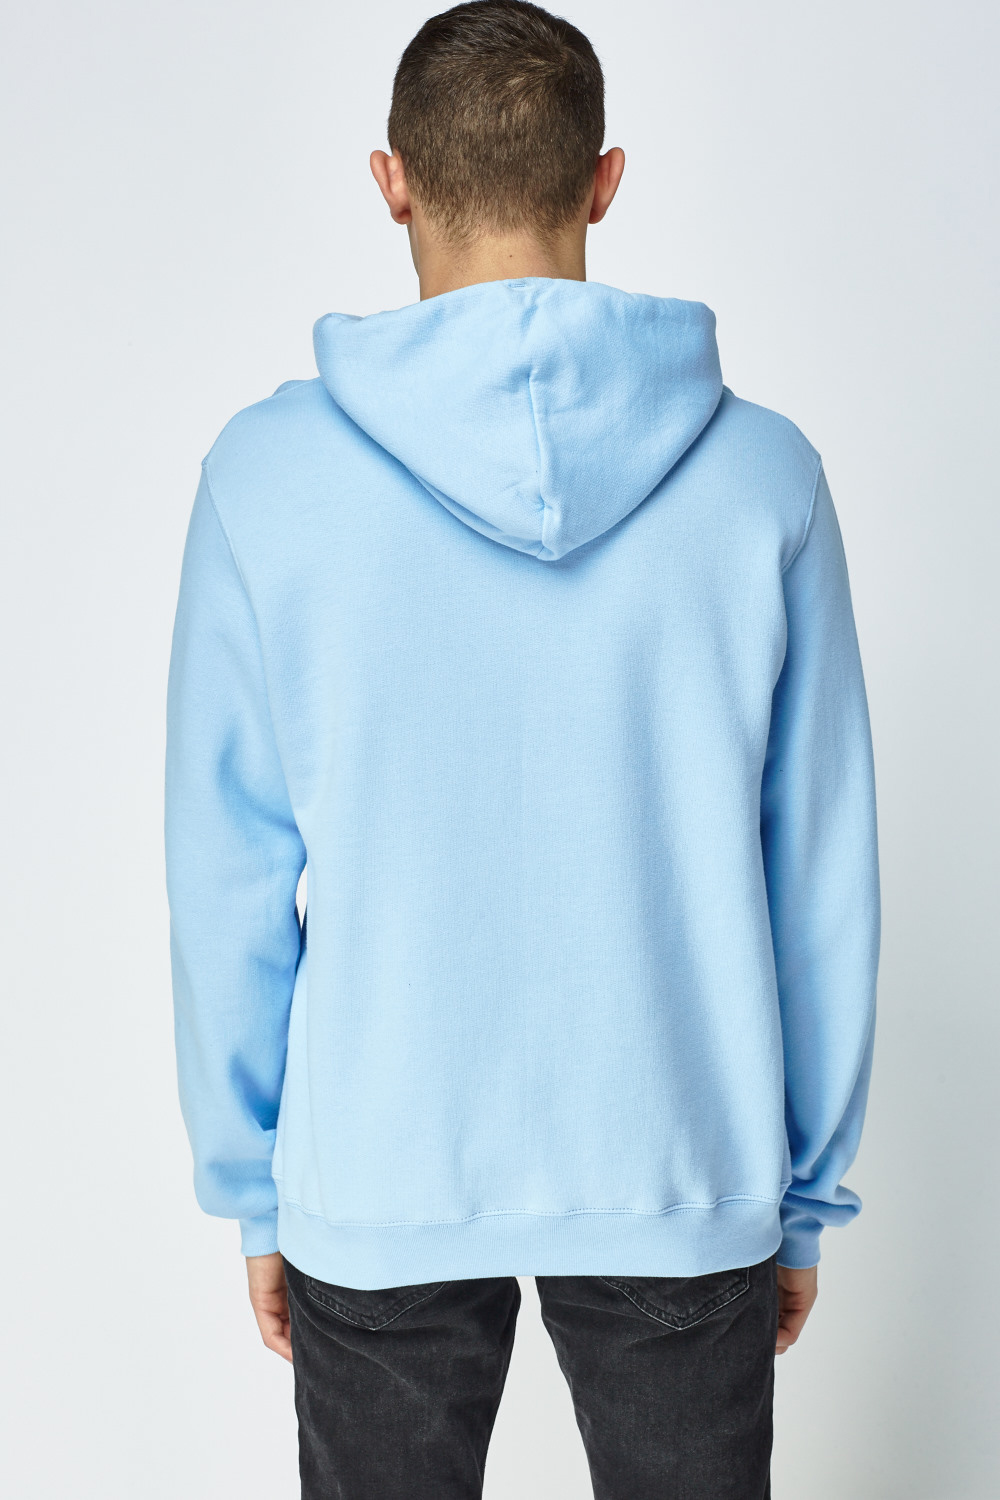 Light Blue Sweatshirt - Just $7